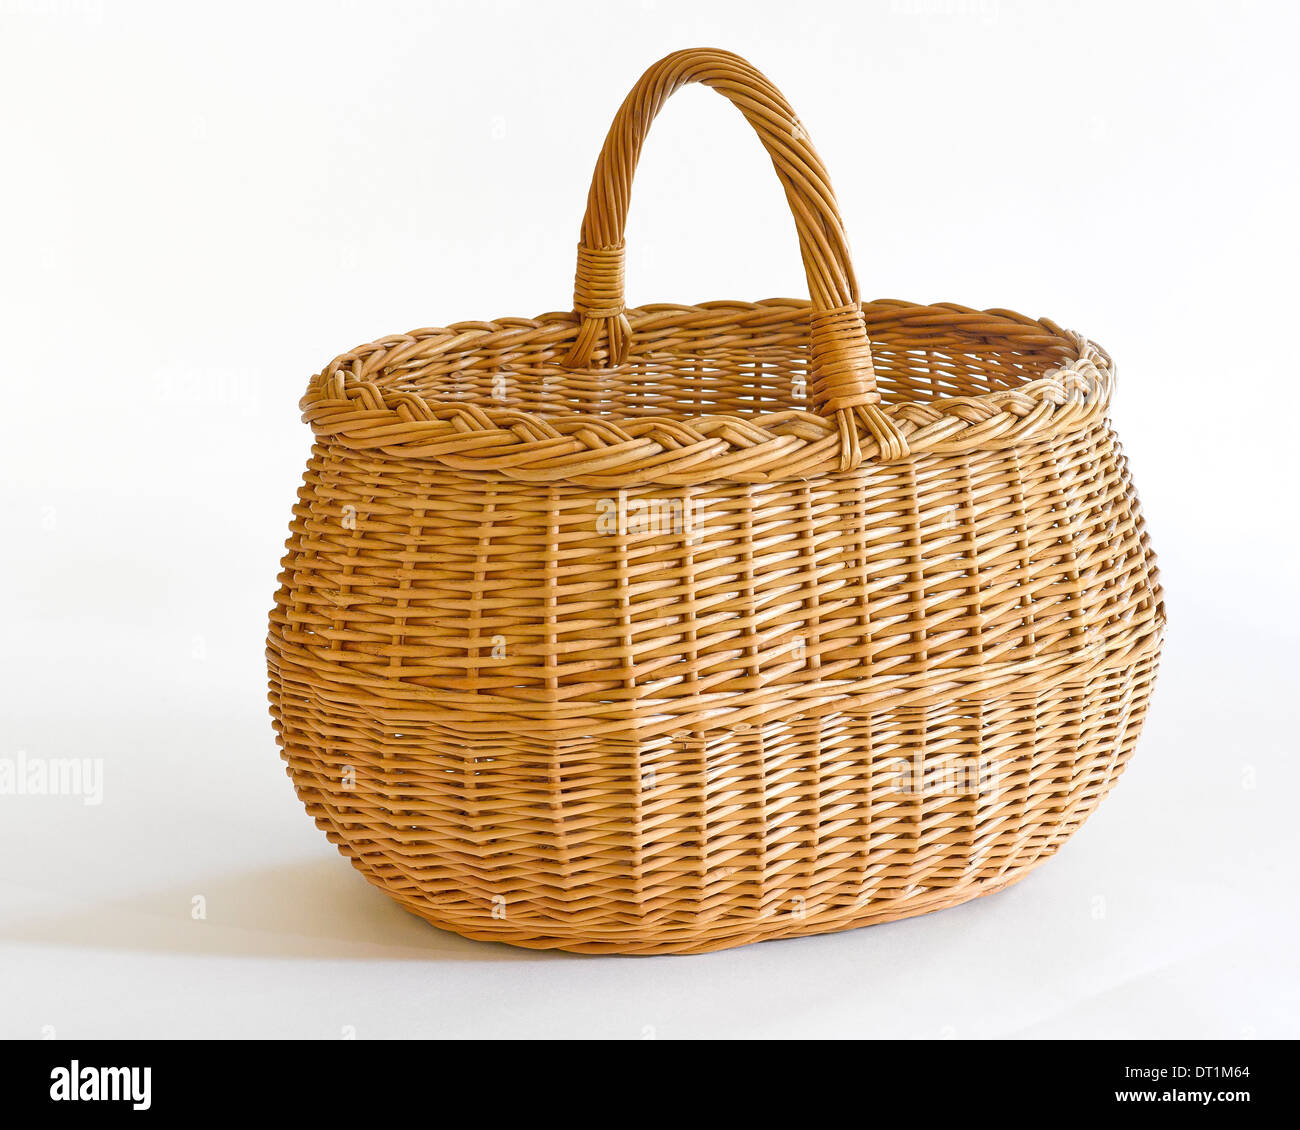 https://c8.alamy.com/comp/DT1M64/household-items-wicker-bags-willow-bags-wicker-baskets-willow-baskets-DT1M64.jpg